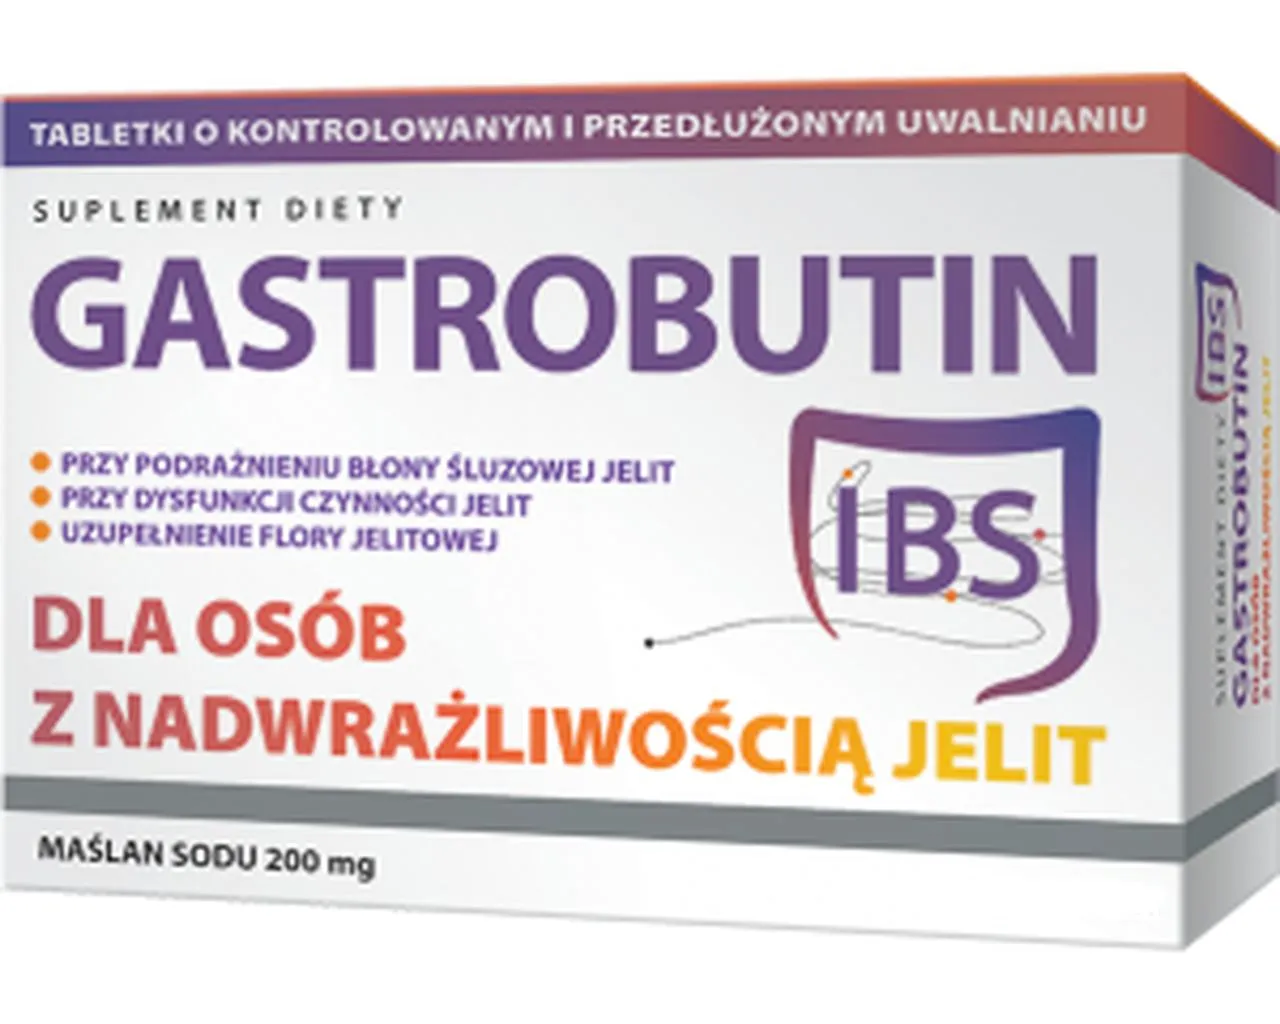 Gastrobutin IBS, suplement diety, 60 tabletek